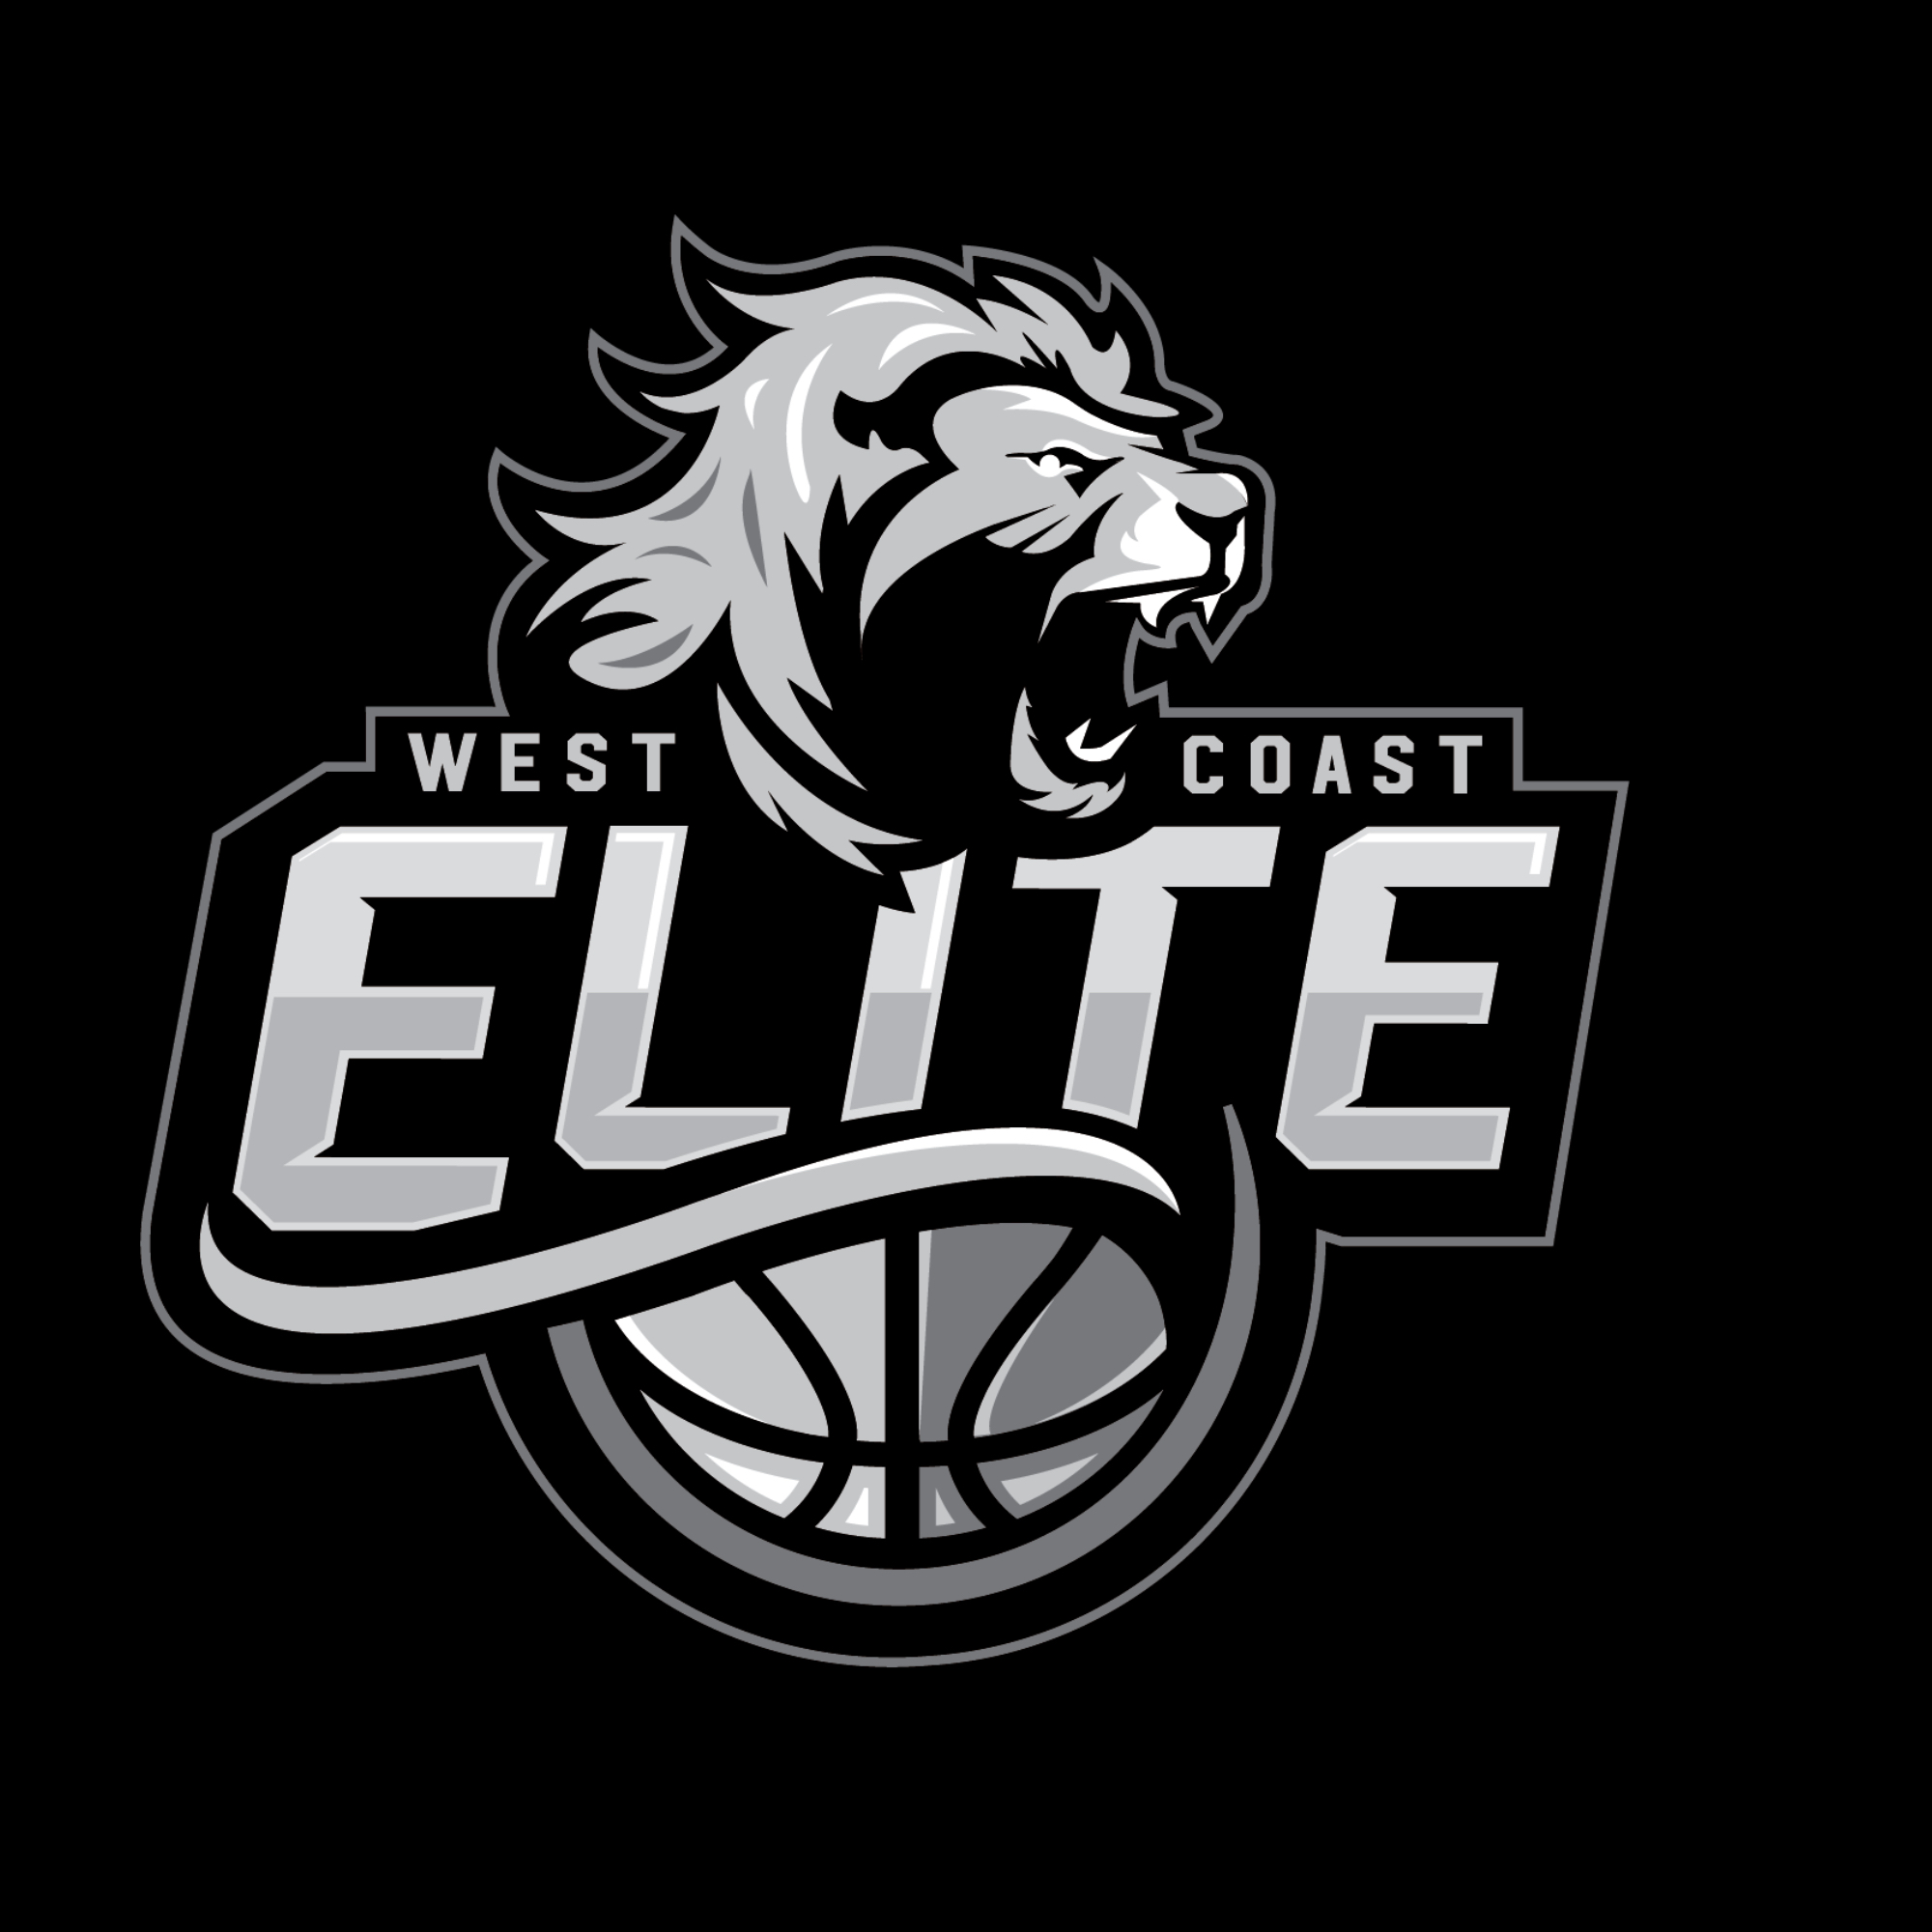 The official logo of West Coast Elite SV